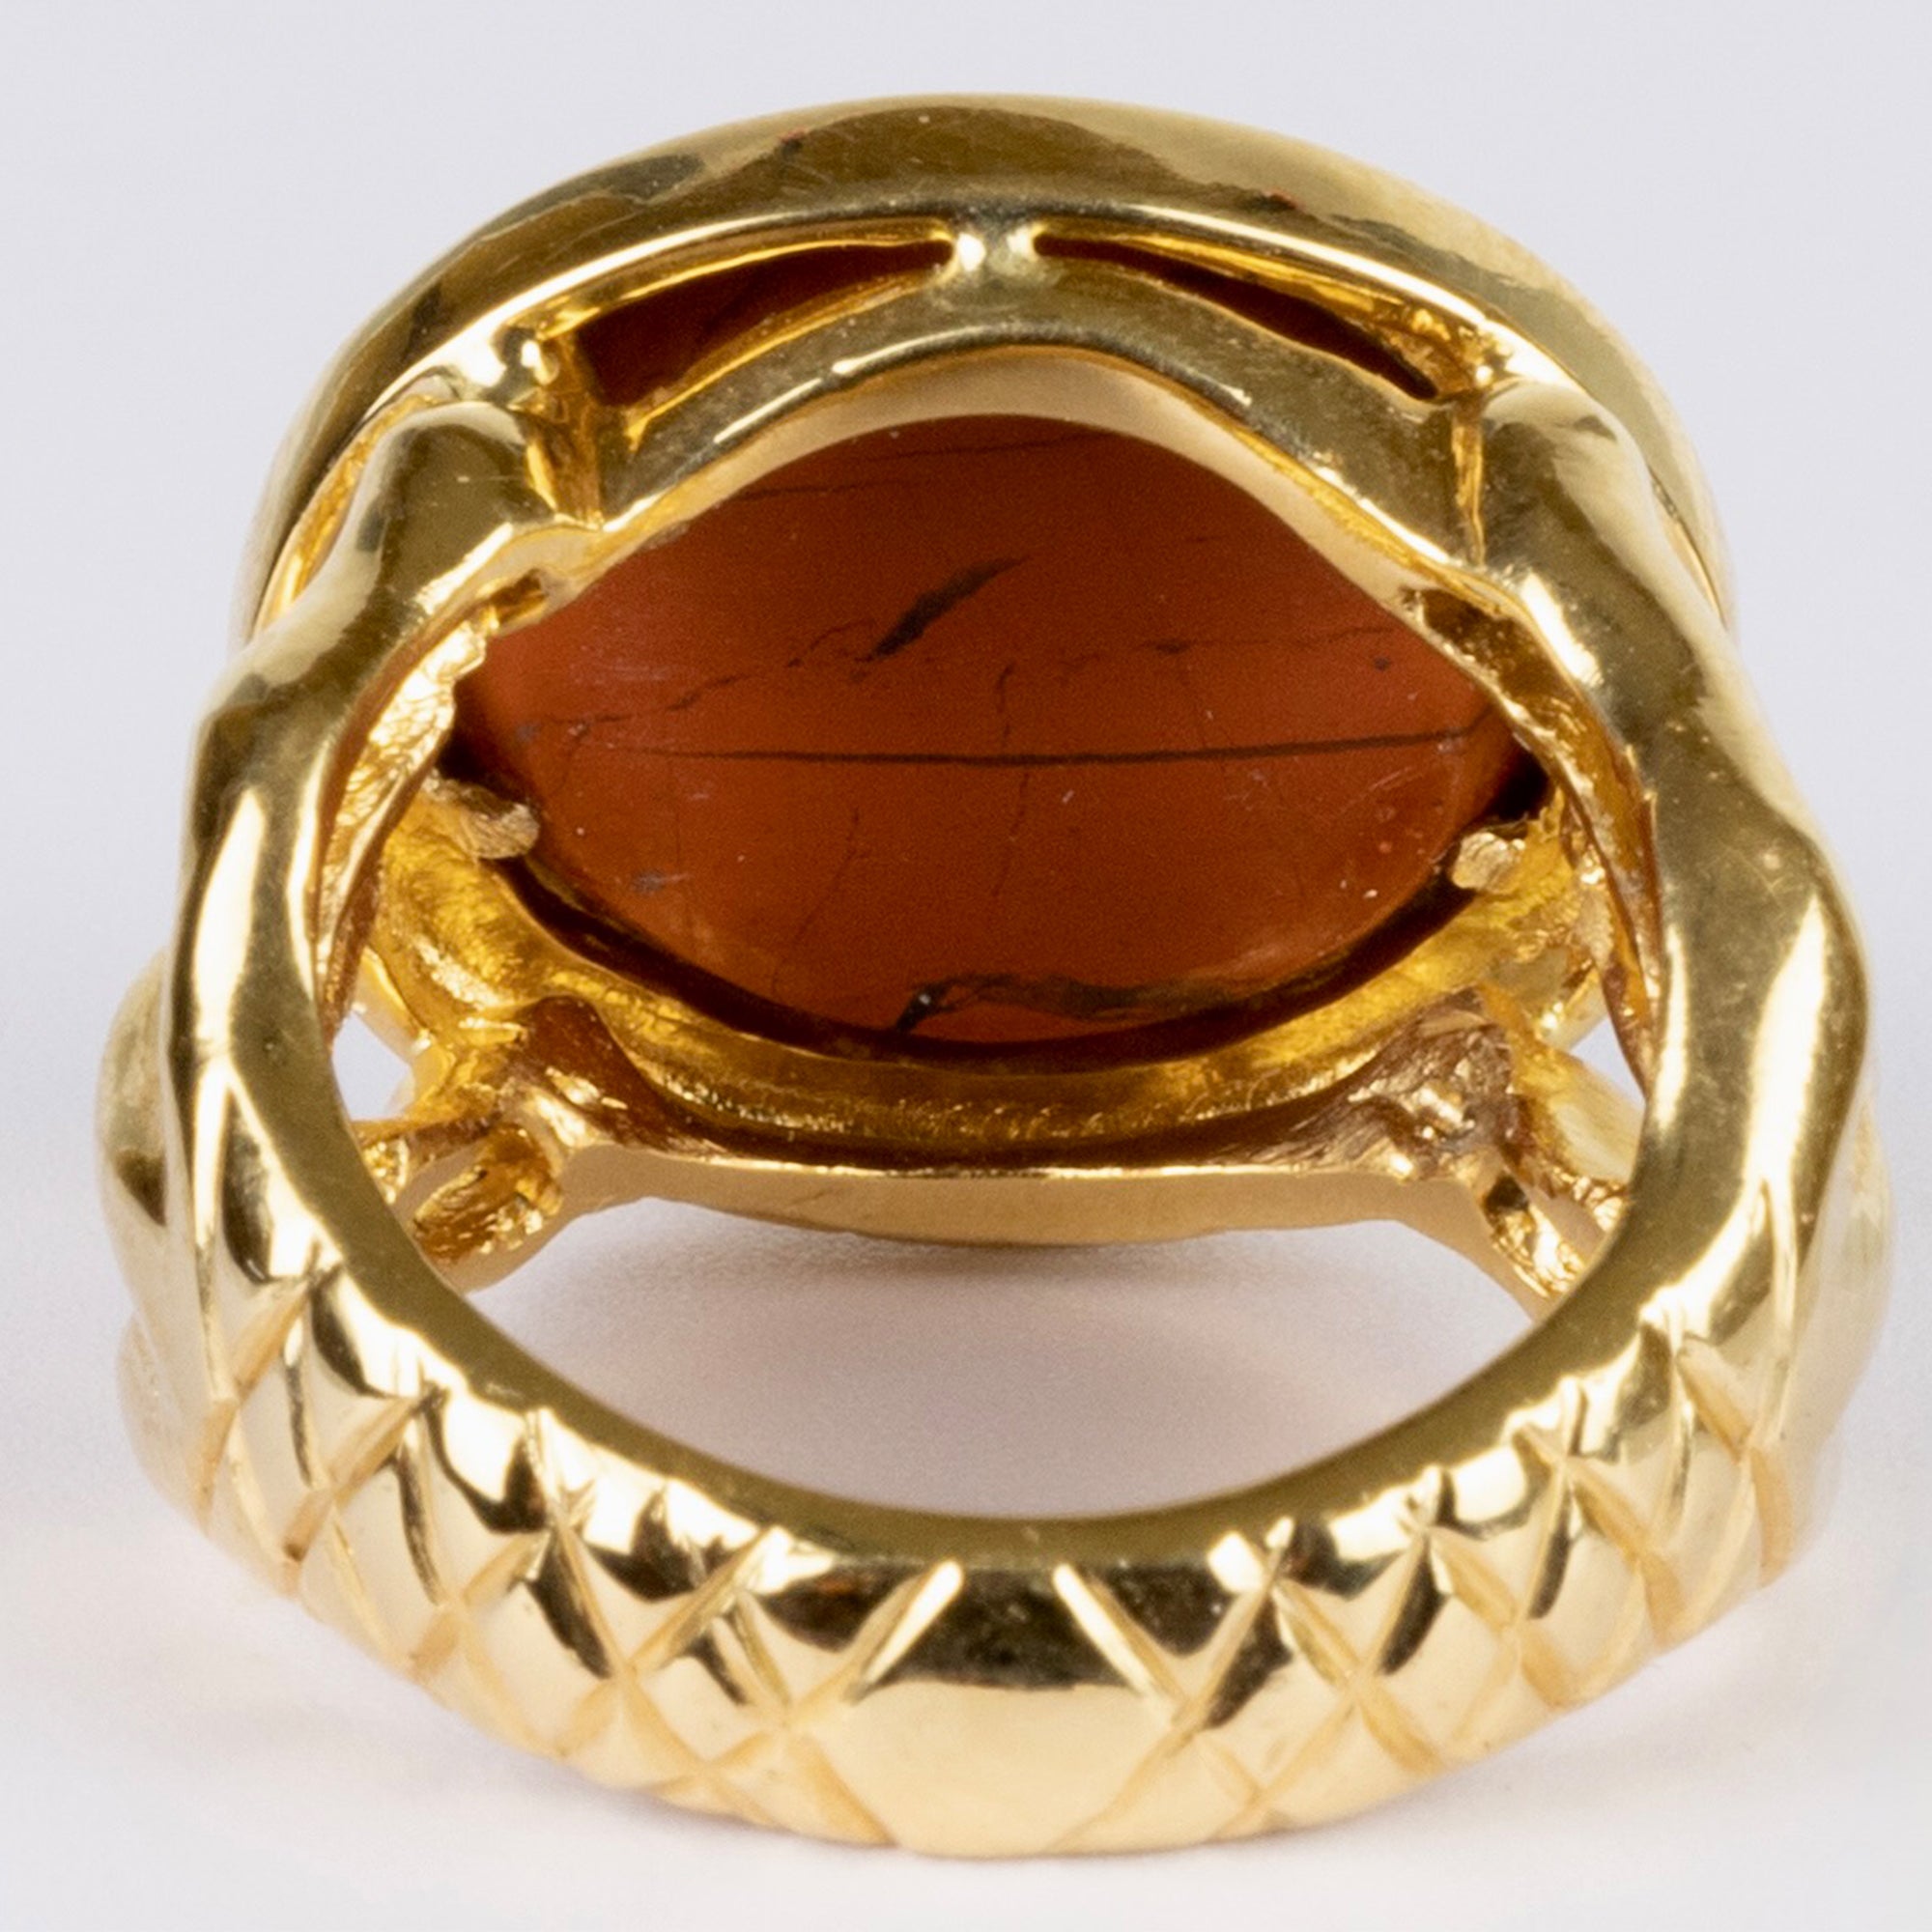 M2259 Intaglio Gold Claw Ring